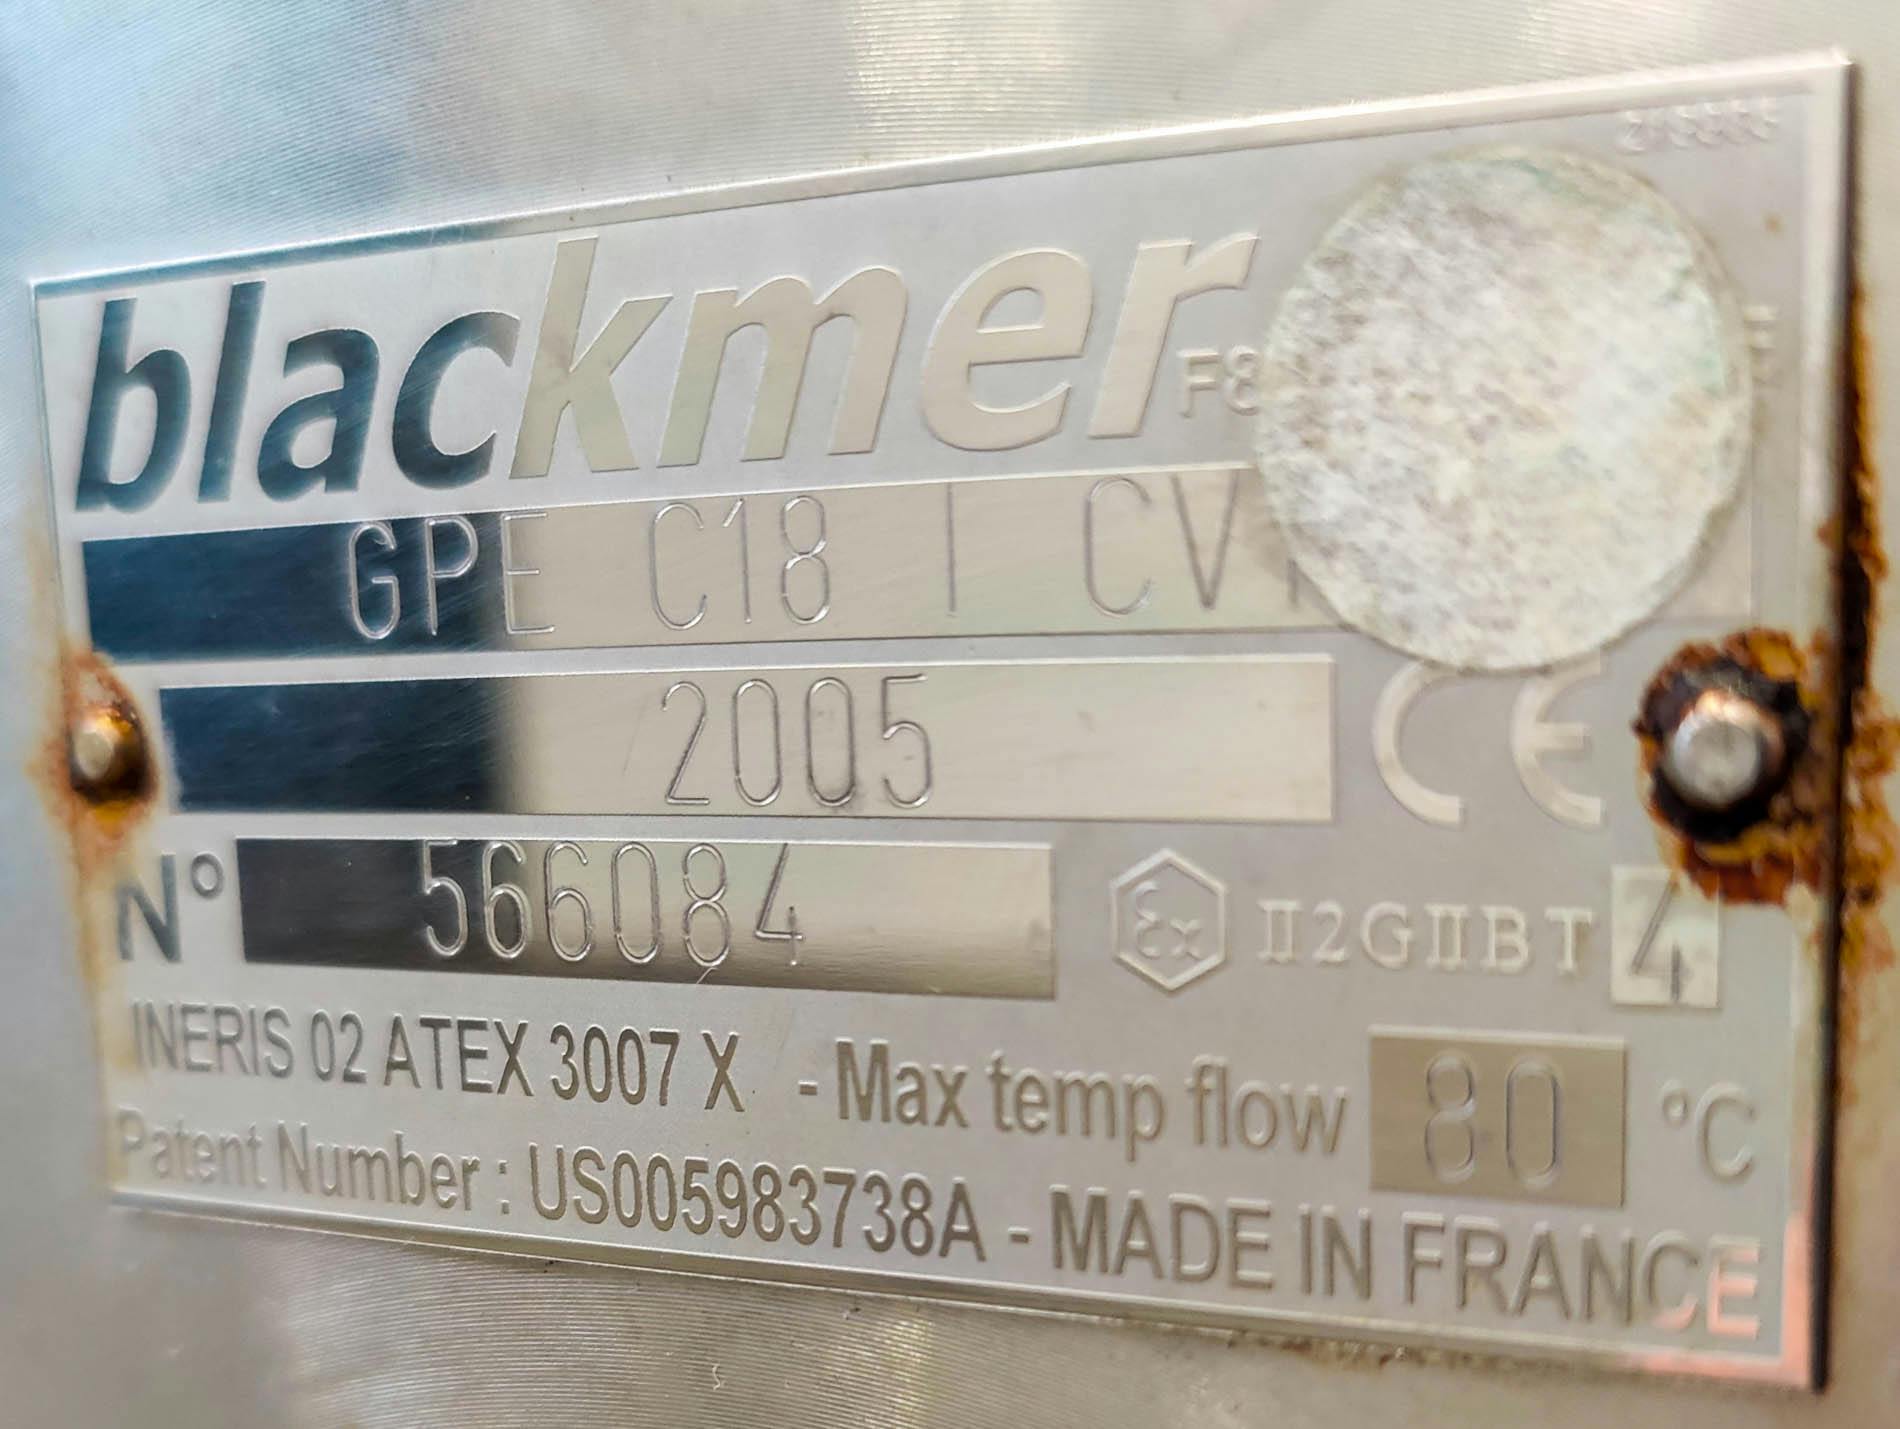 Blackmer GPI C18 I CV - Эксцентриковый шнековый насос - image 11